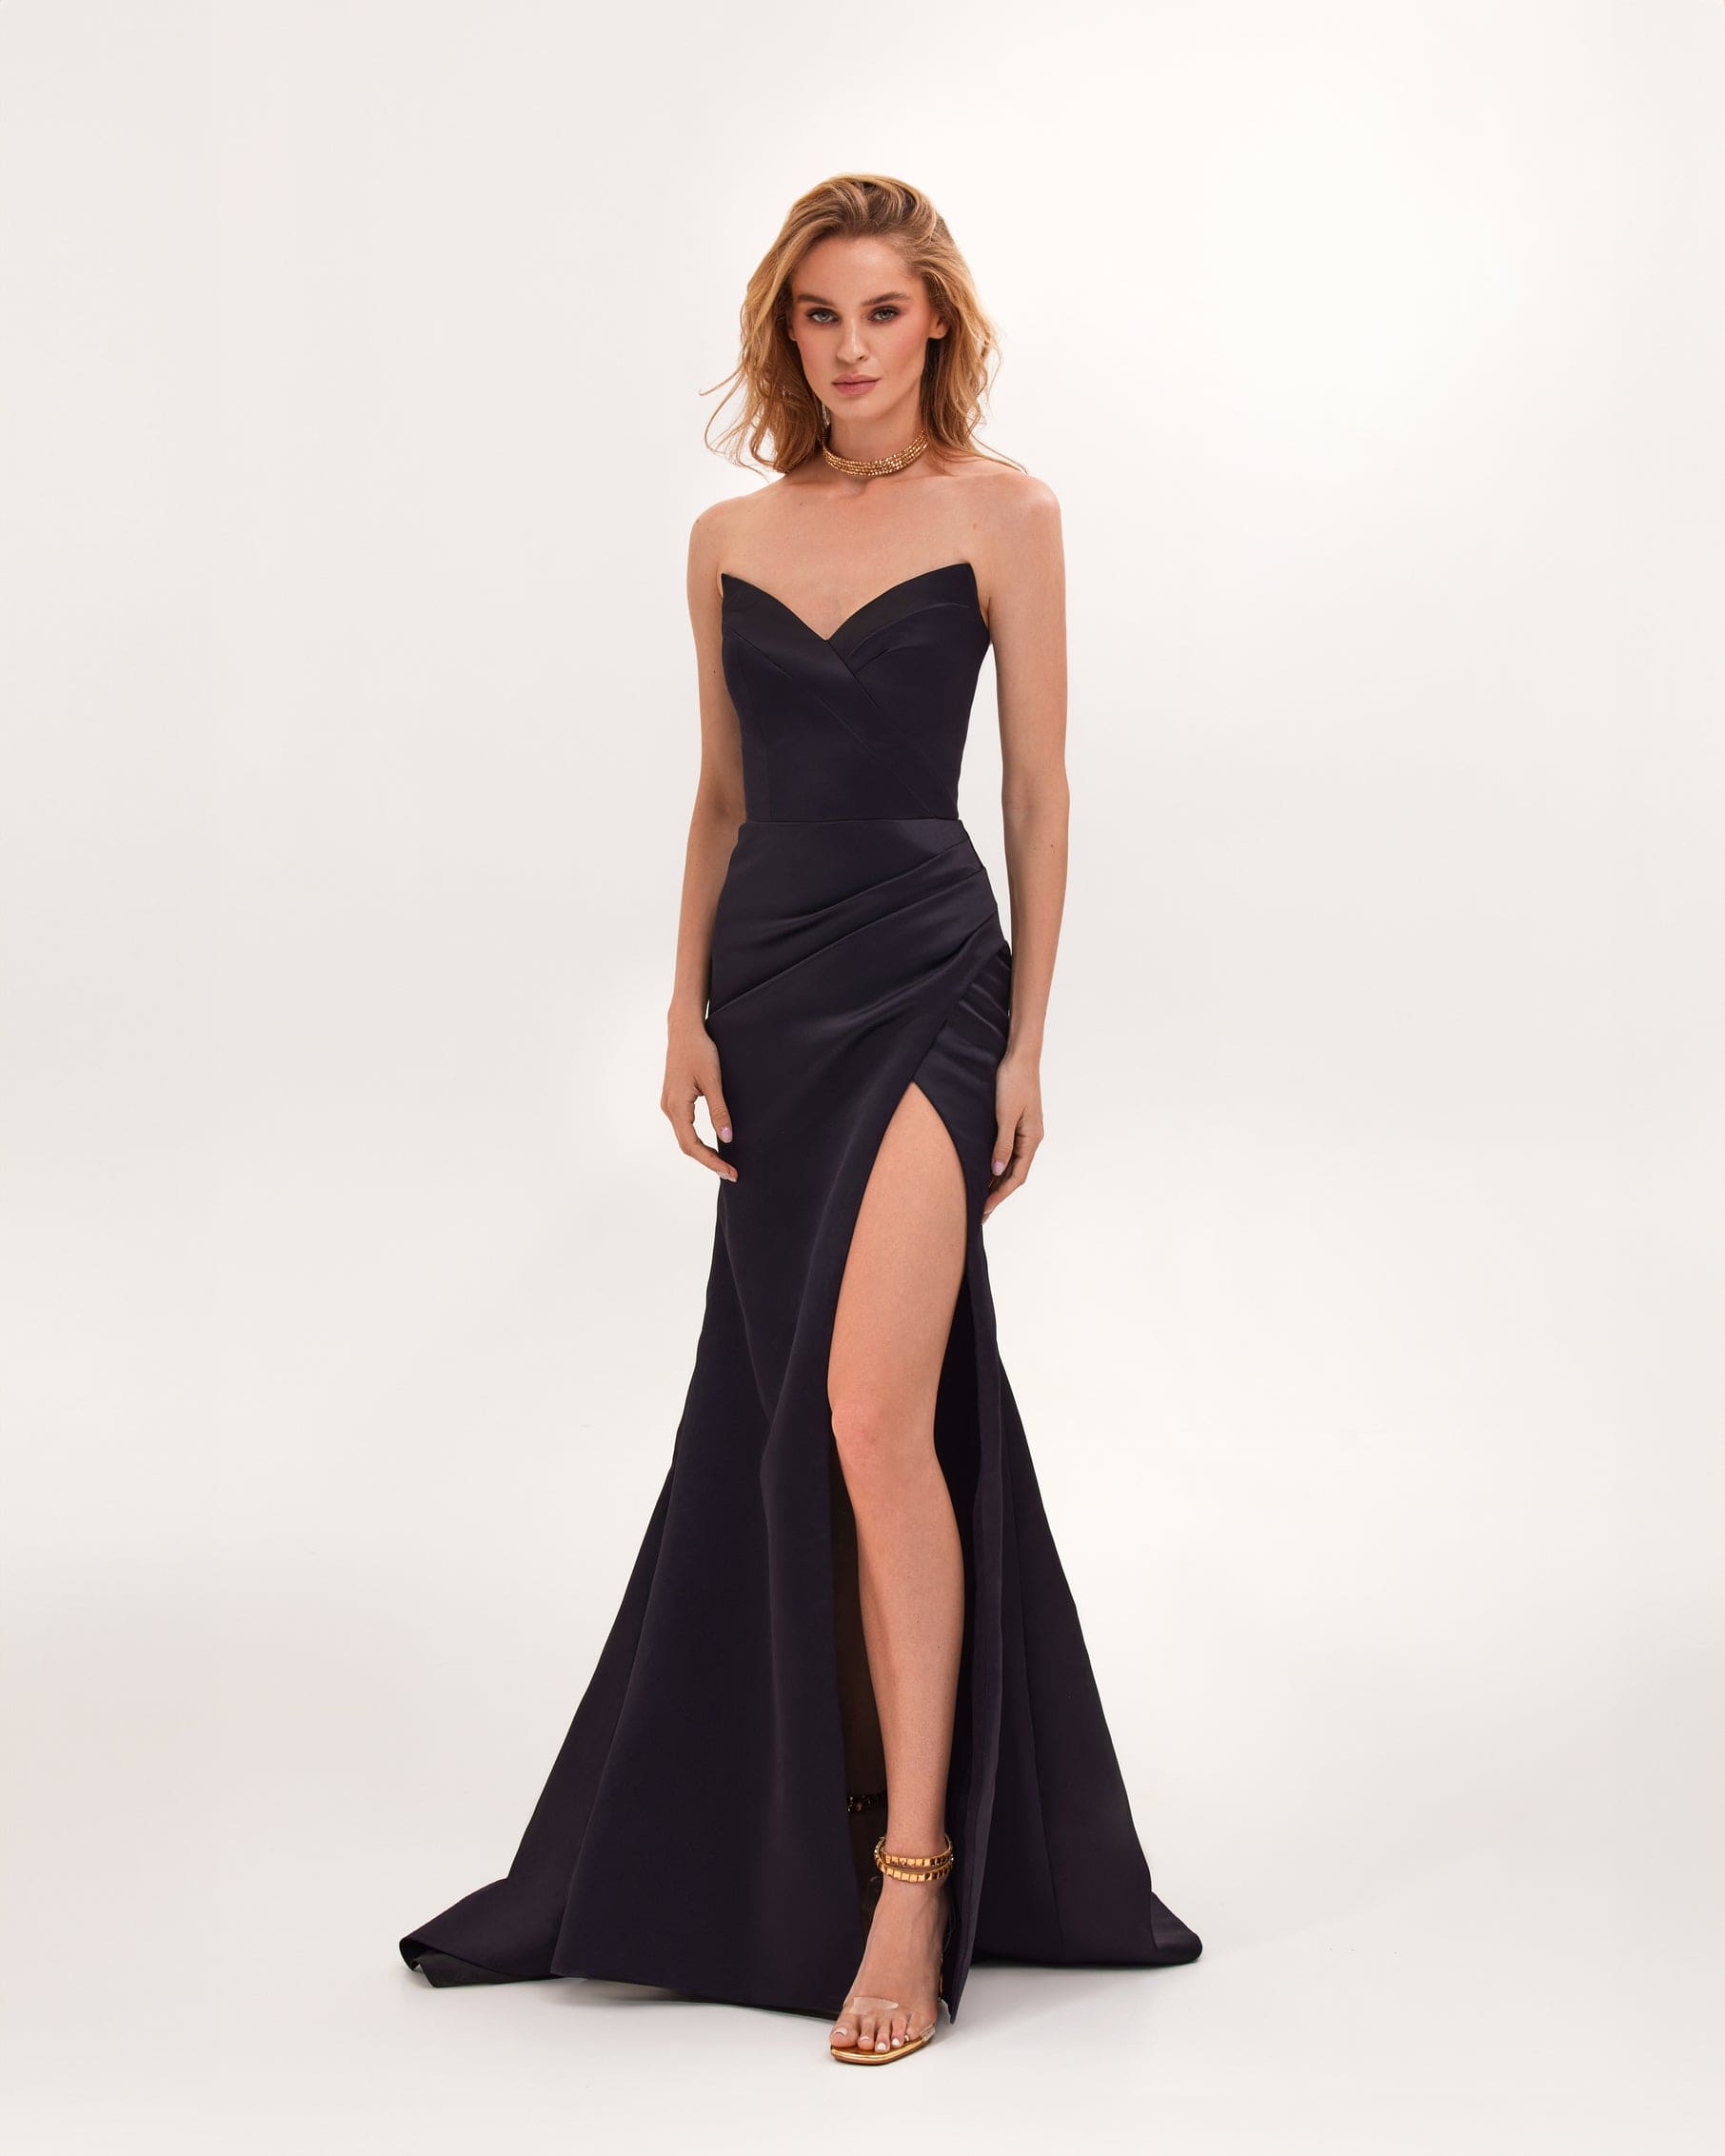 Black Evening Corset Dress, Reception Dress, Plus Size Evening